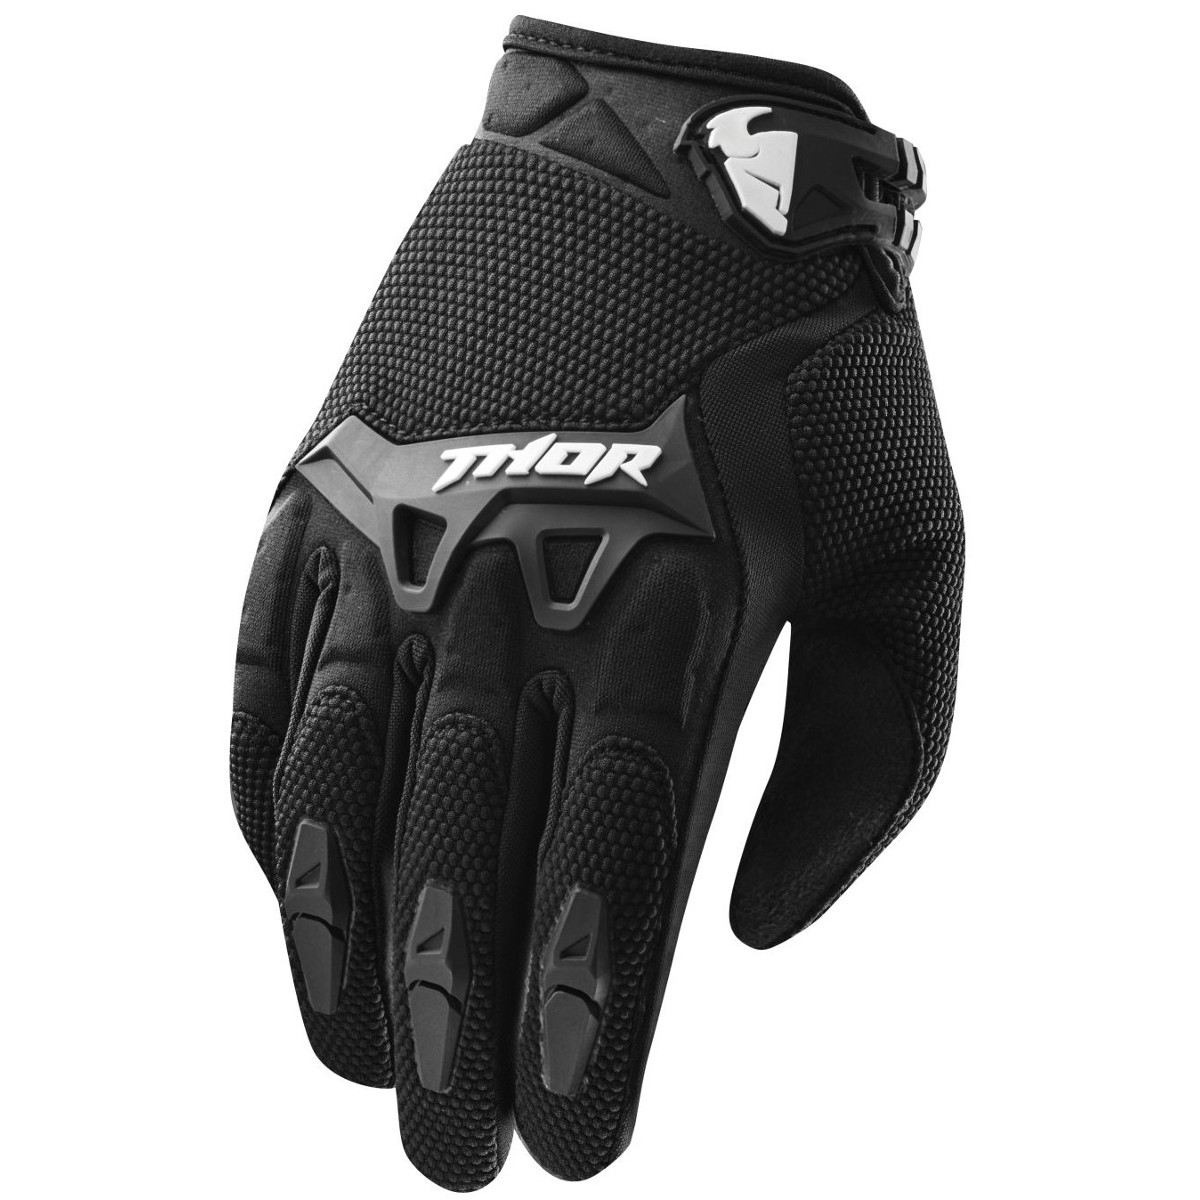 Thor Gloves S15 Spectrum Black